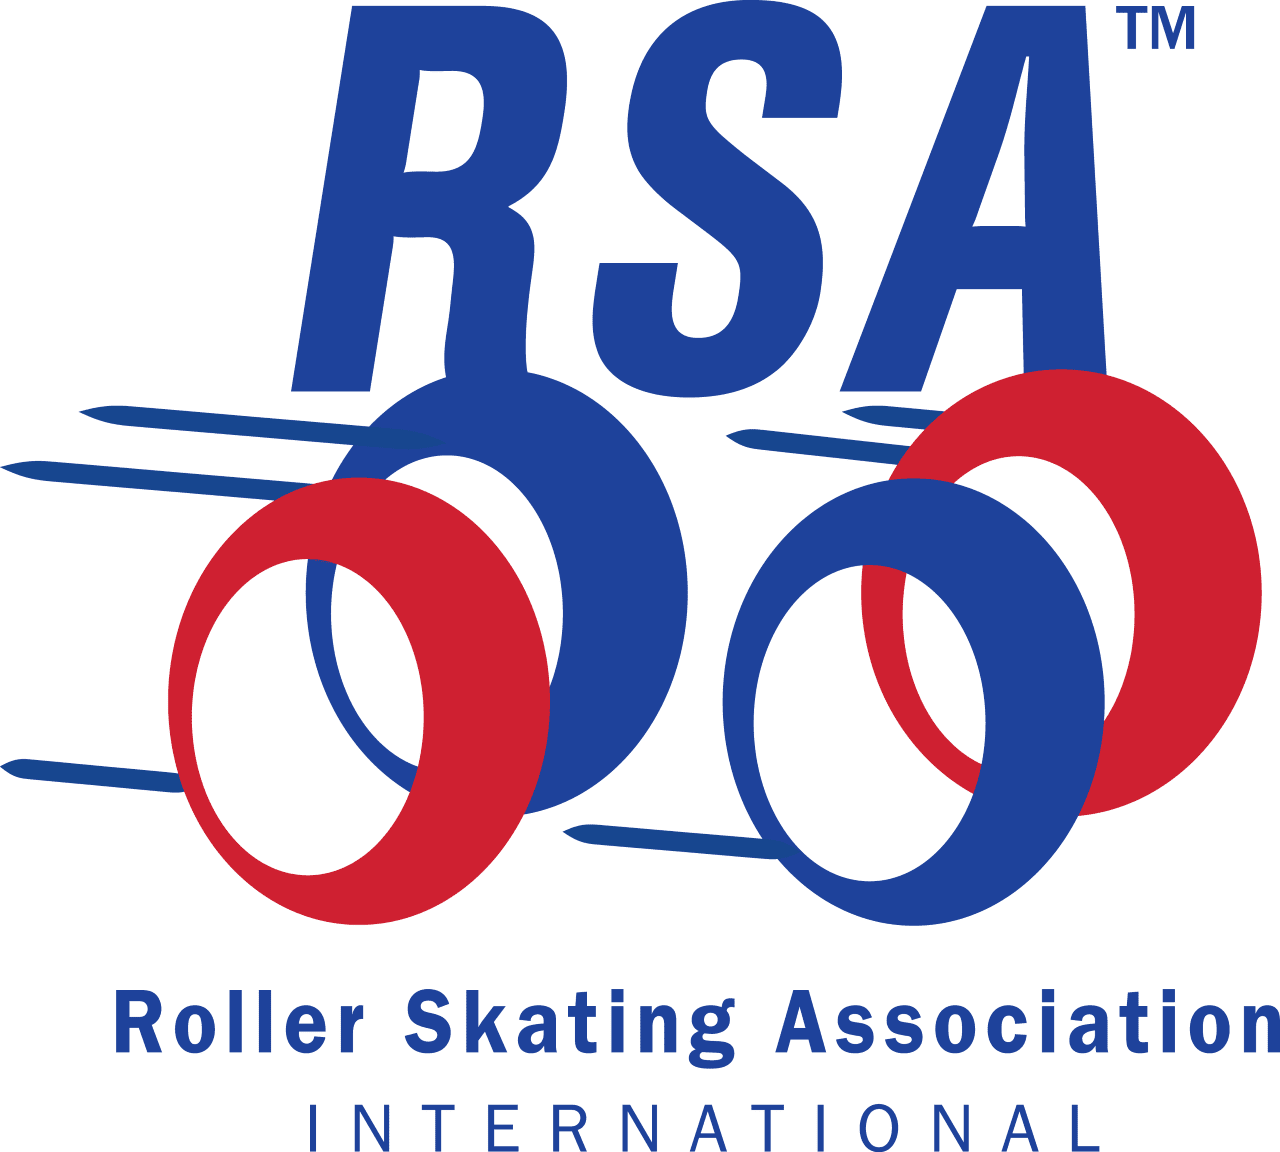 The Roller Skating Association logo